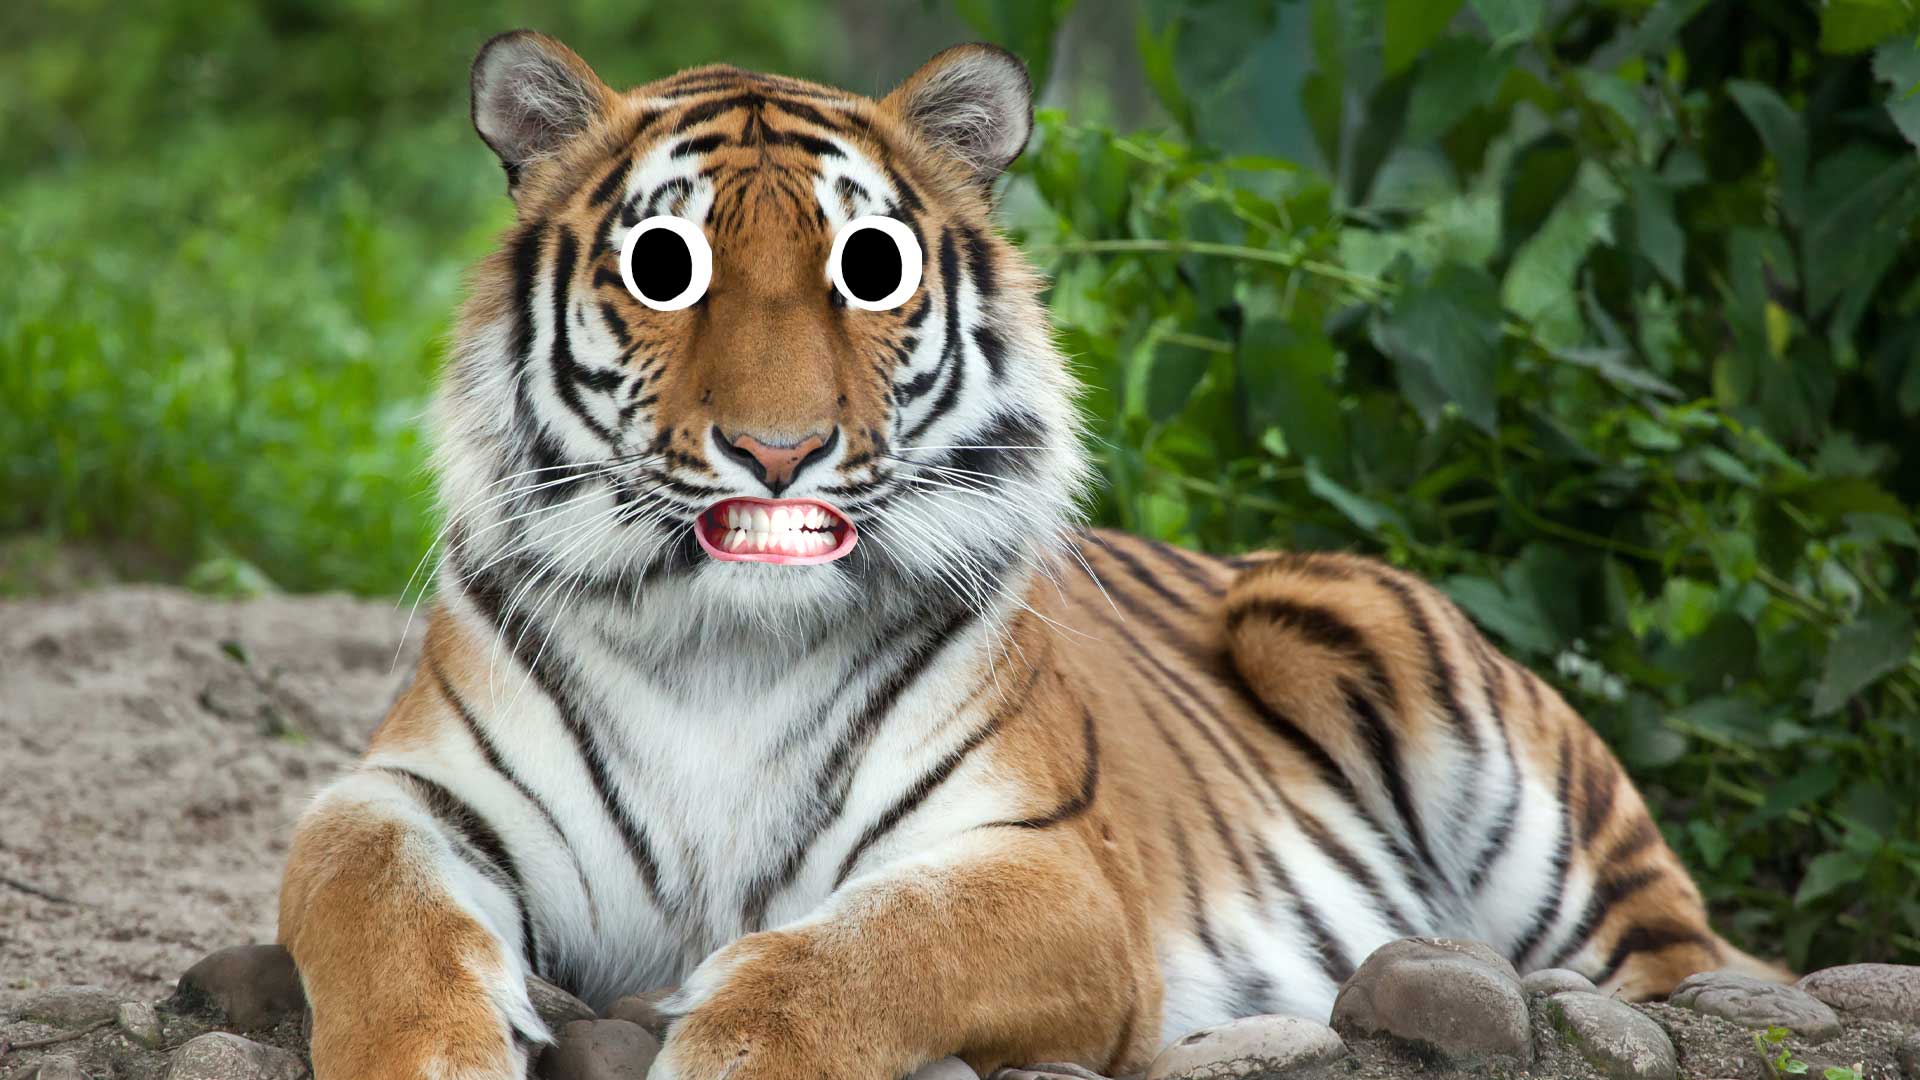 An Amur tiger